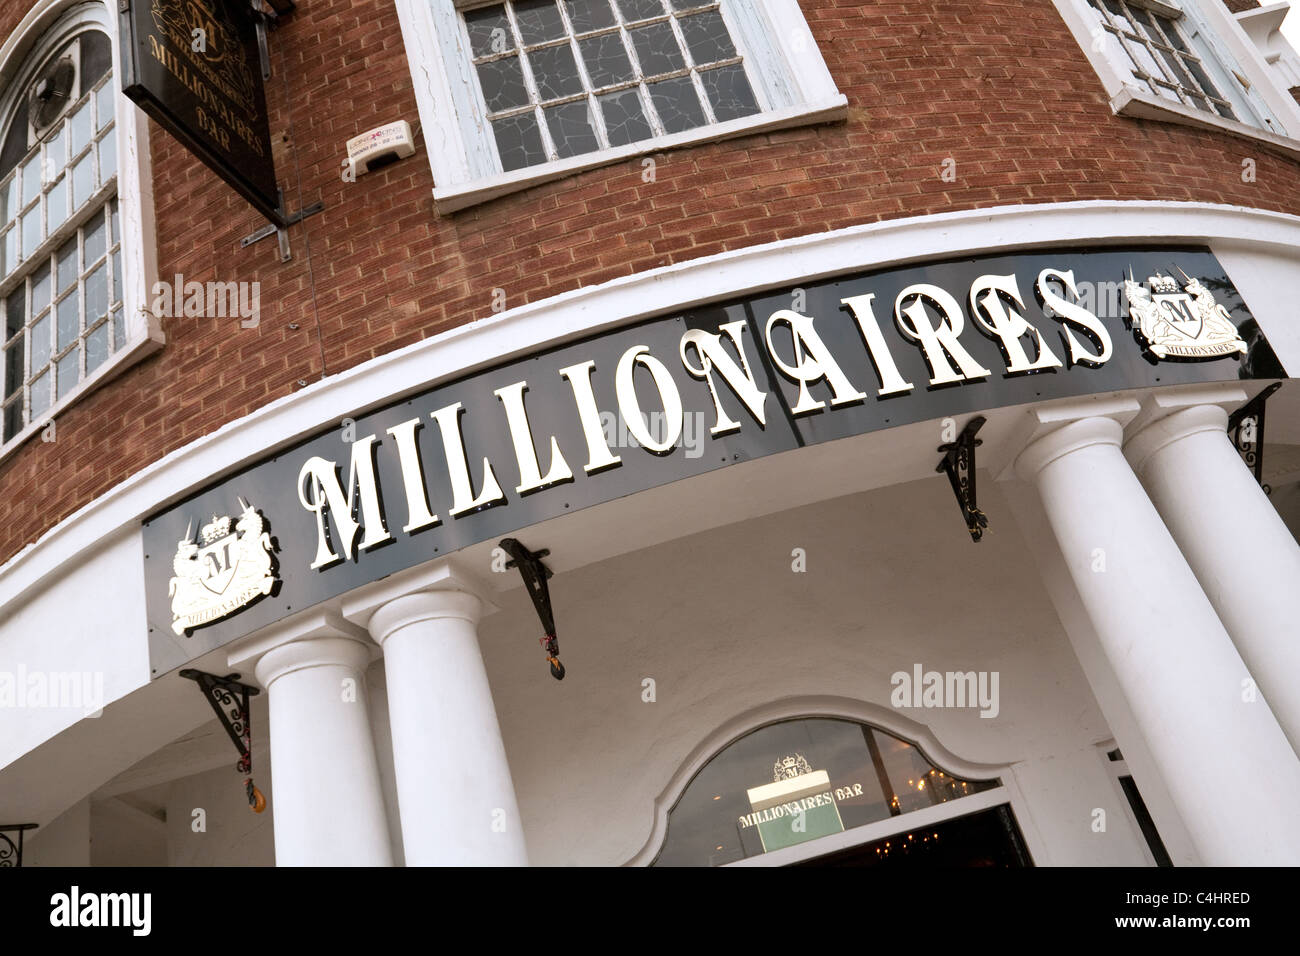 Millionaires club sign, Newmarket Suffolk UK Stock Photo